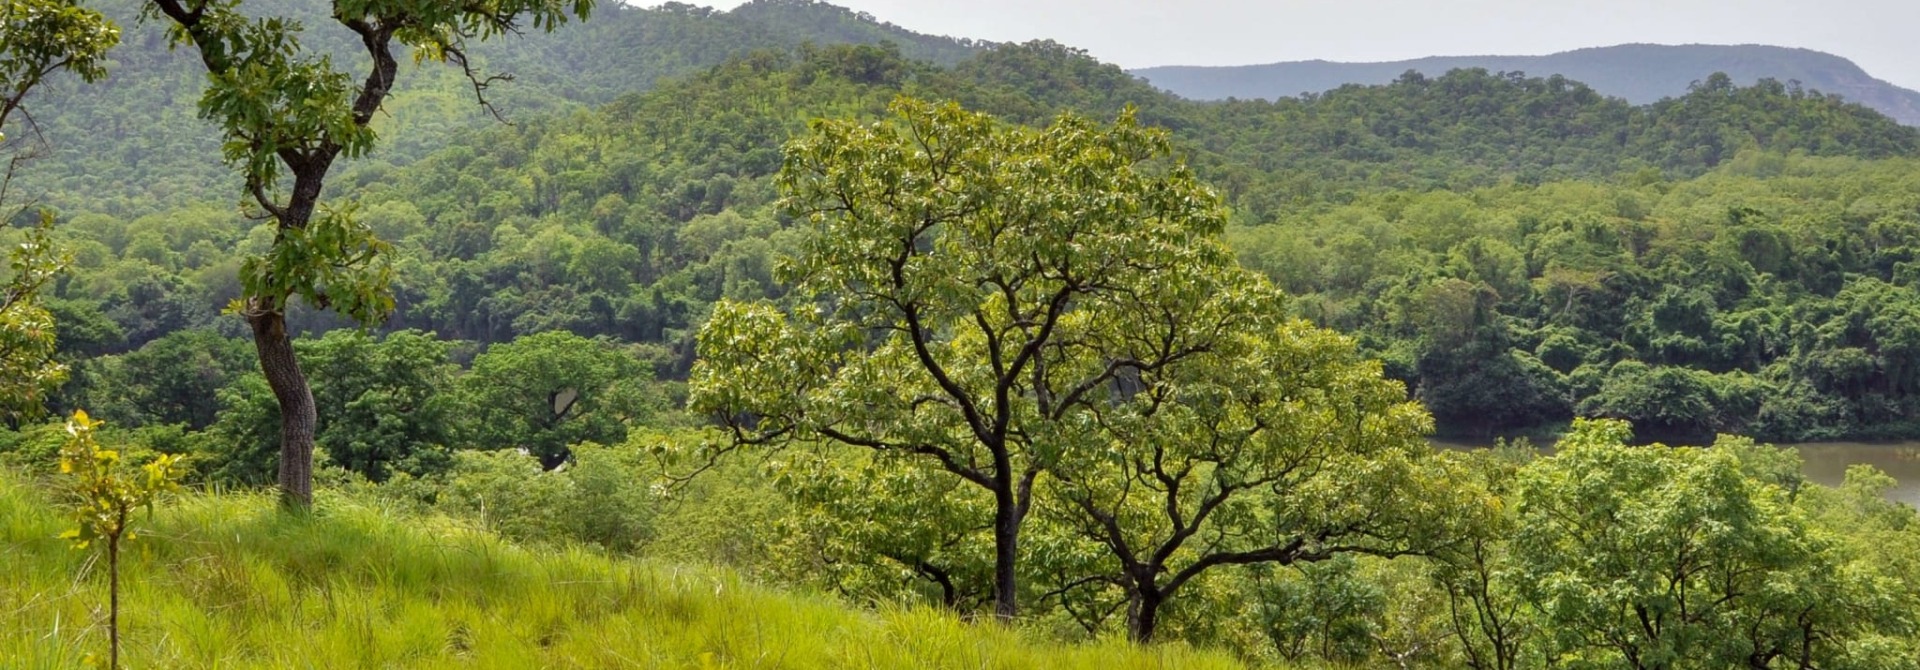 Ghana Rainforest